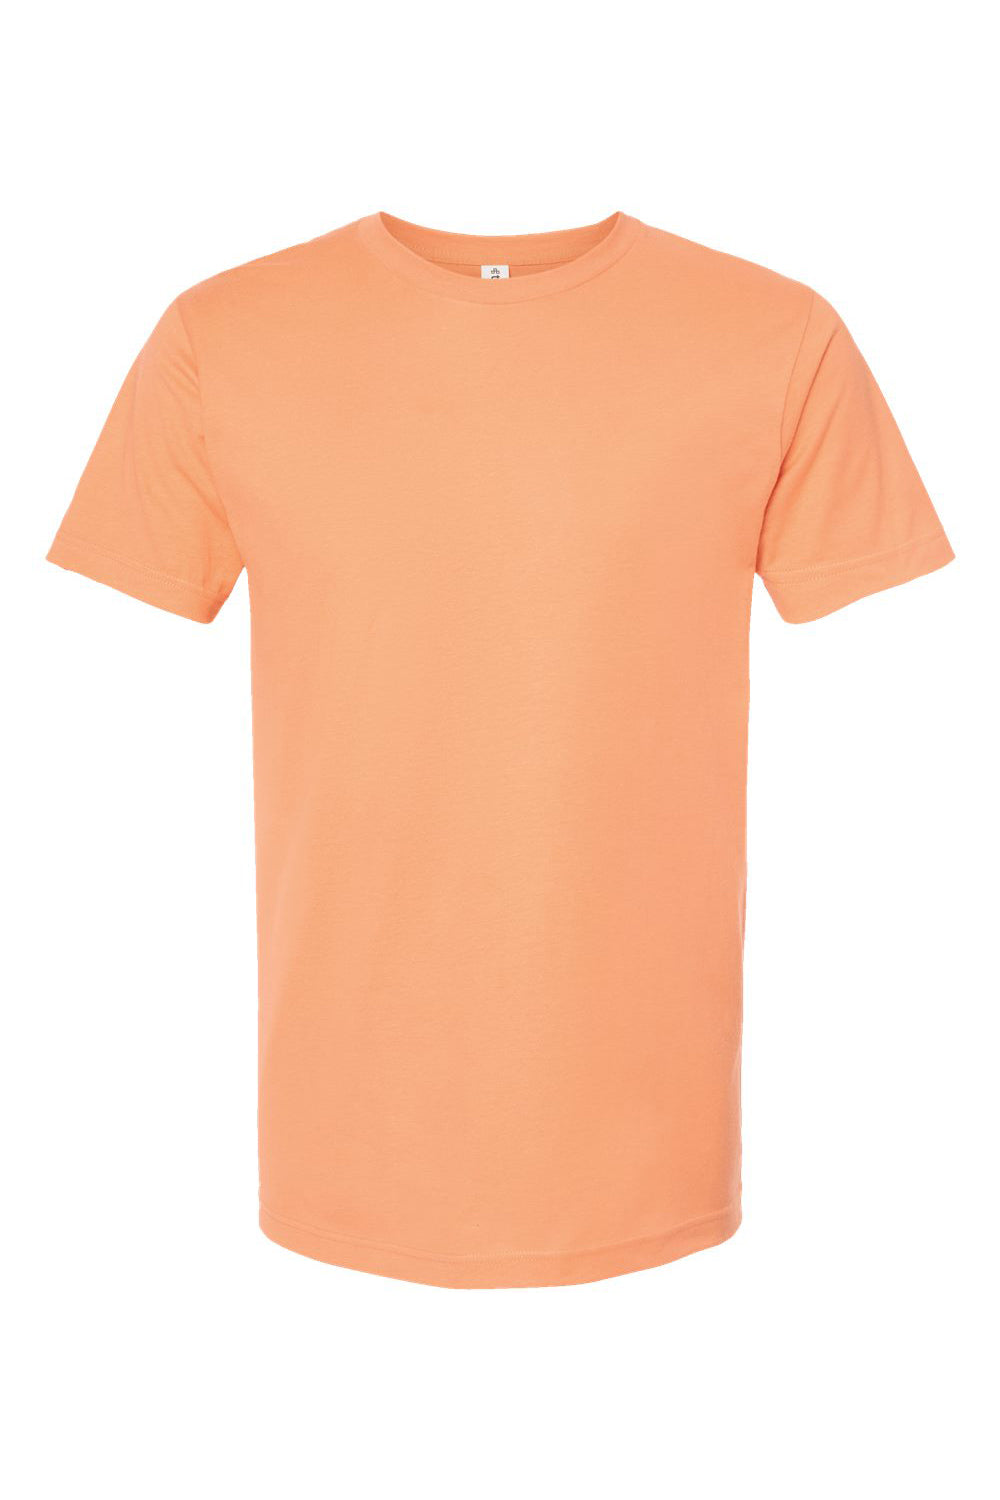 Tultex 202 Mens Fine Jersey Short Sleeve Crewneck T-Shirt Cantaloupe Orange Flat Front